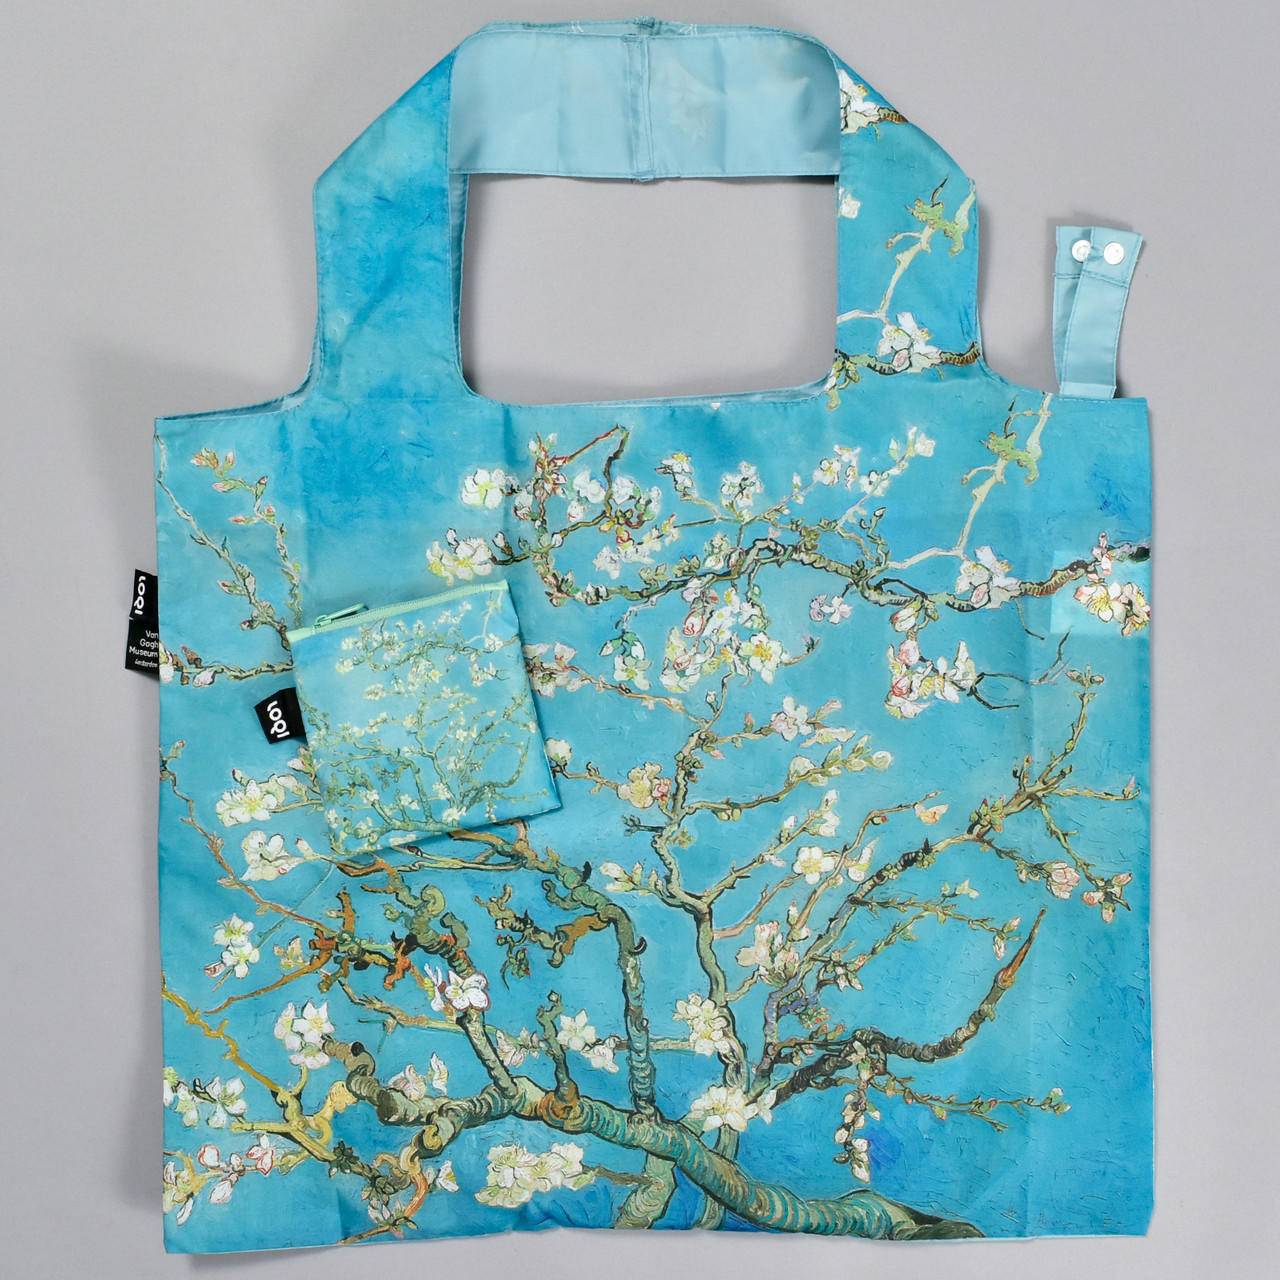 Almond Blossom Van Gogh Flower Tote Bag - Teeholly